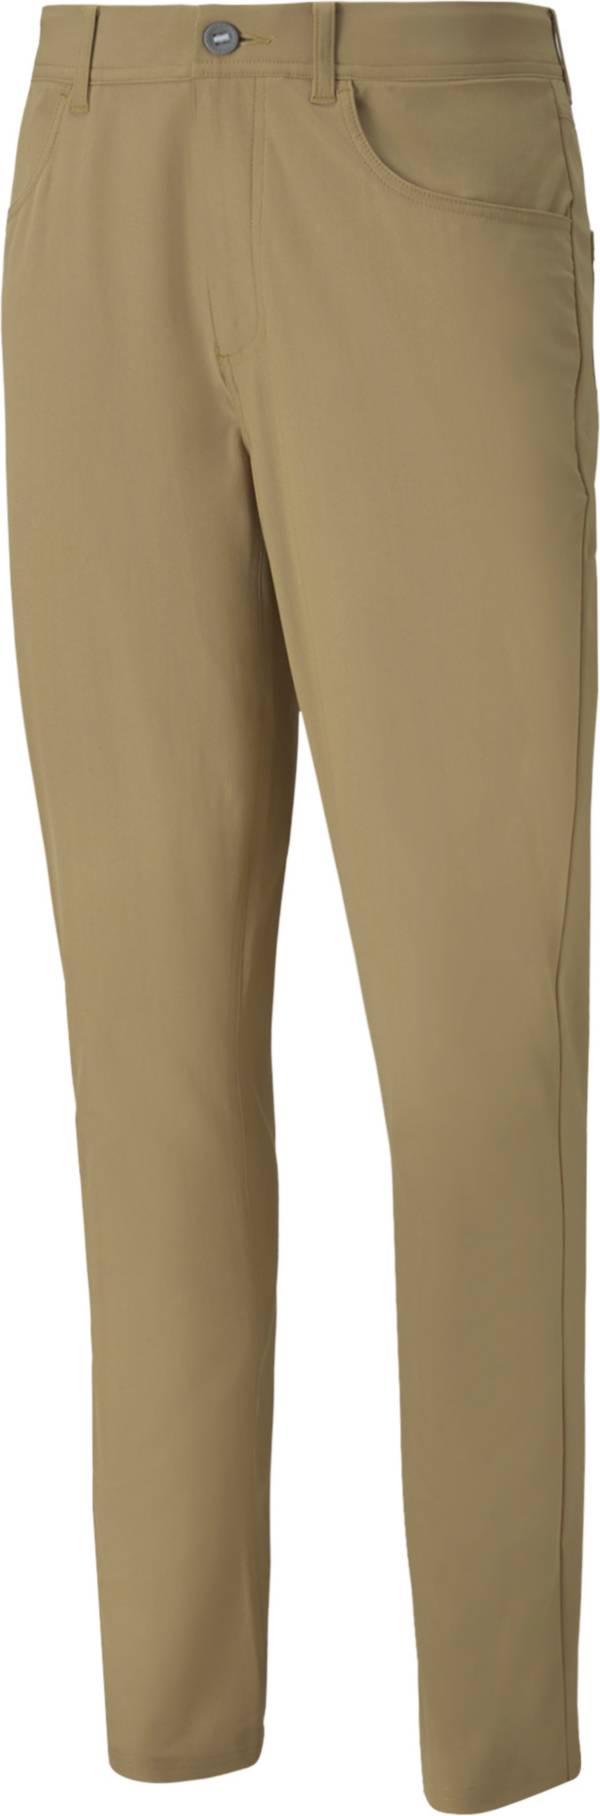 PUMA Men's 101 Golf Pants product image